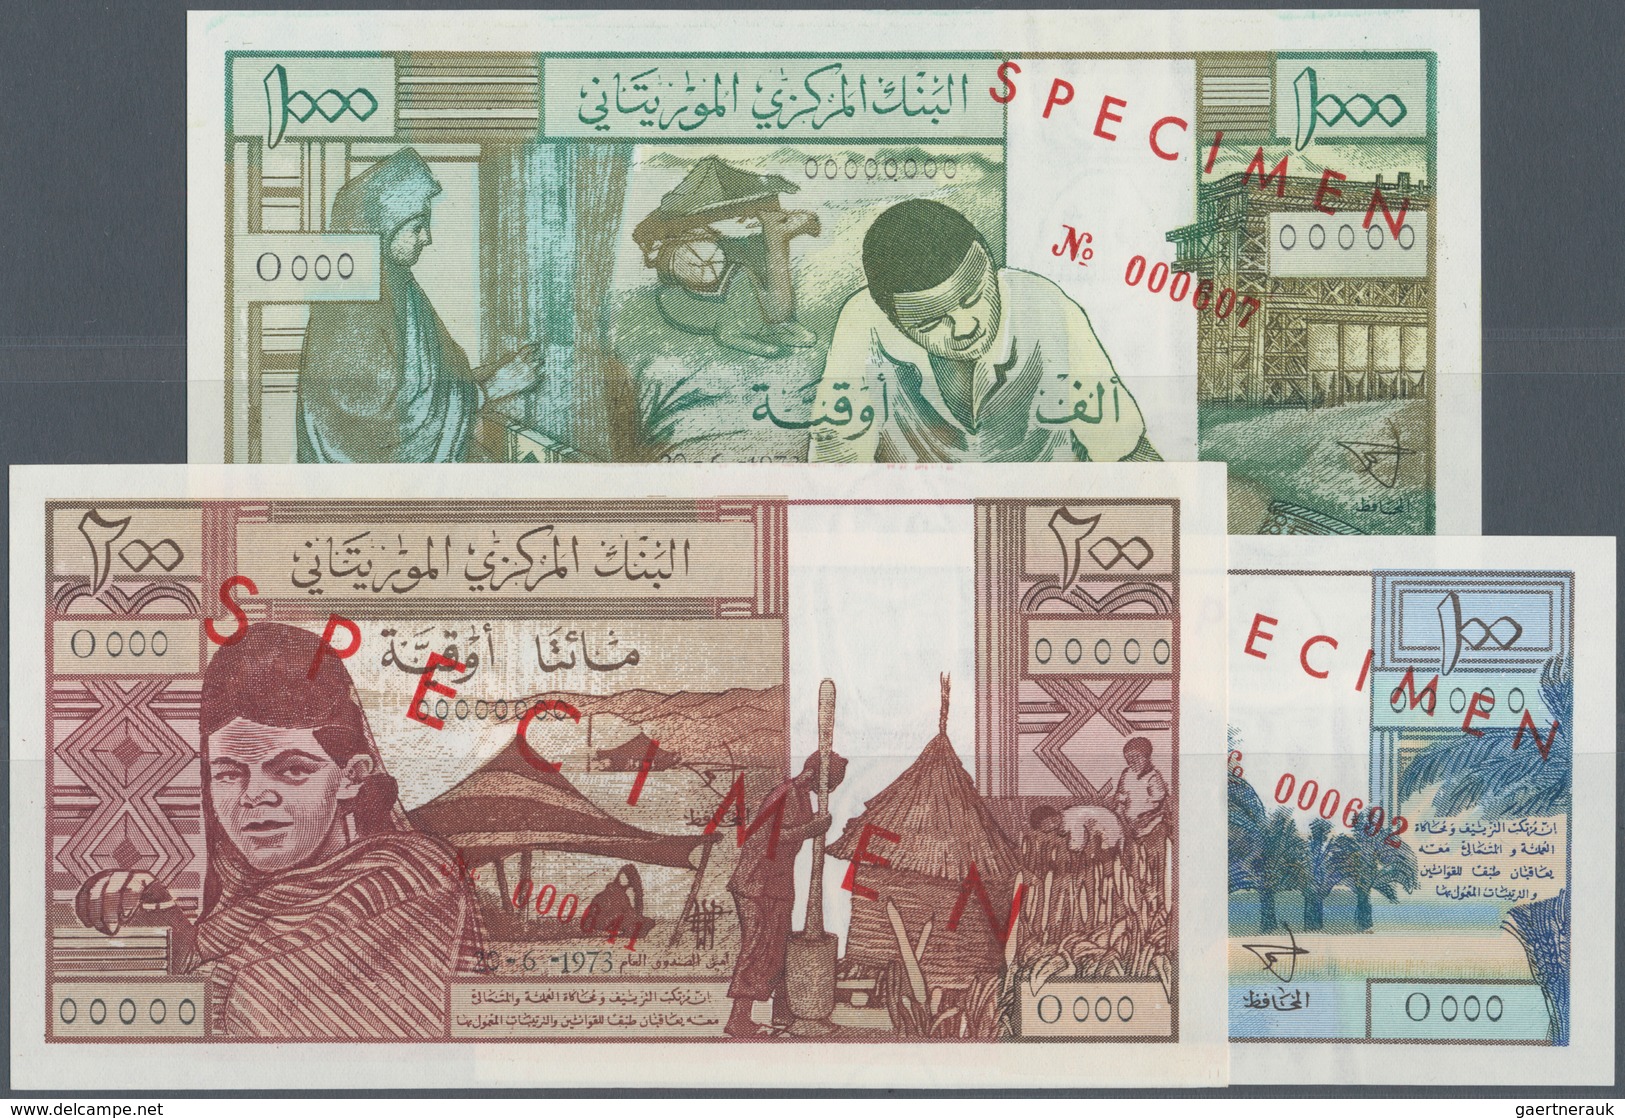 Mauritania / Mauretanien: Set Of 3 SPECIMEN Banknotes Containing 100, 200 & 1000 Ouguiya 1973 P. 1s, - Mauritanien